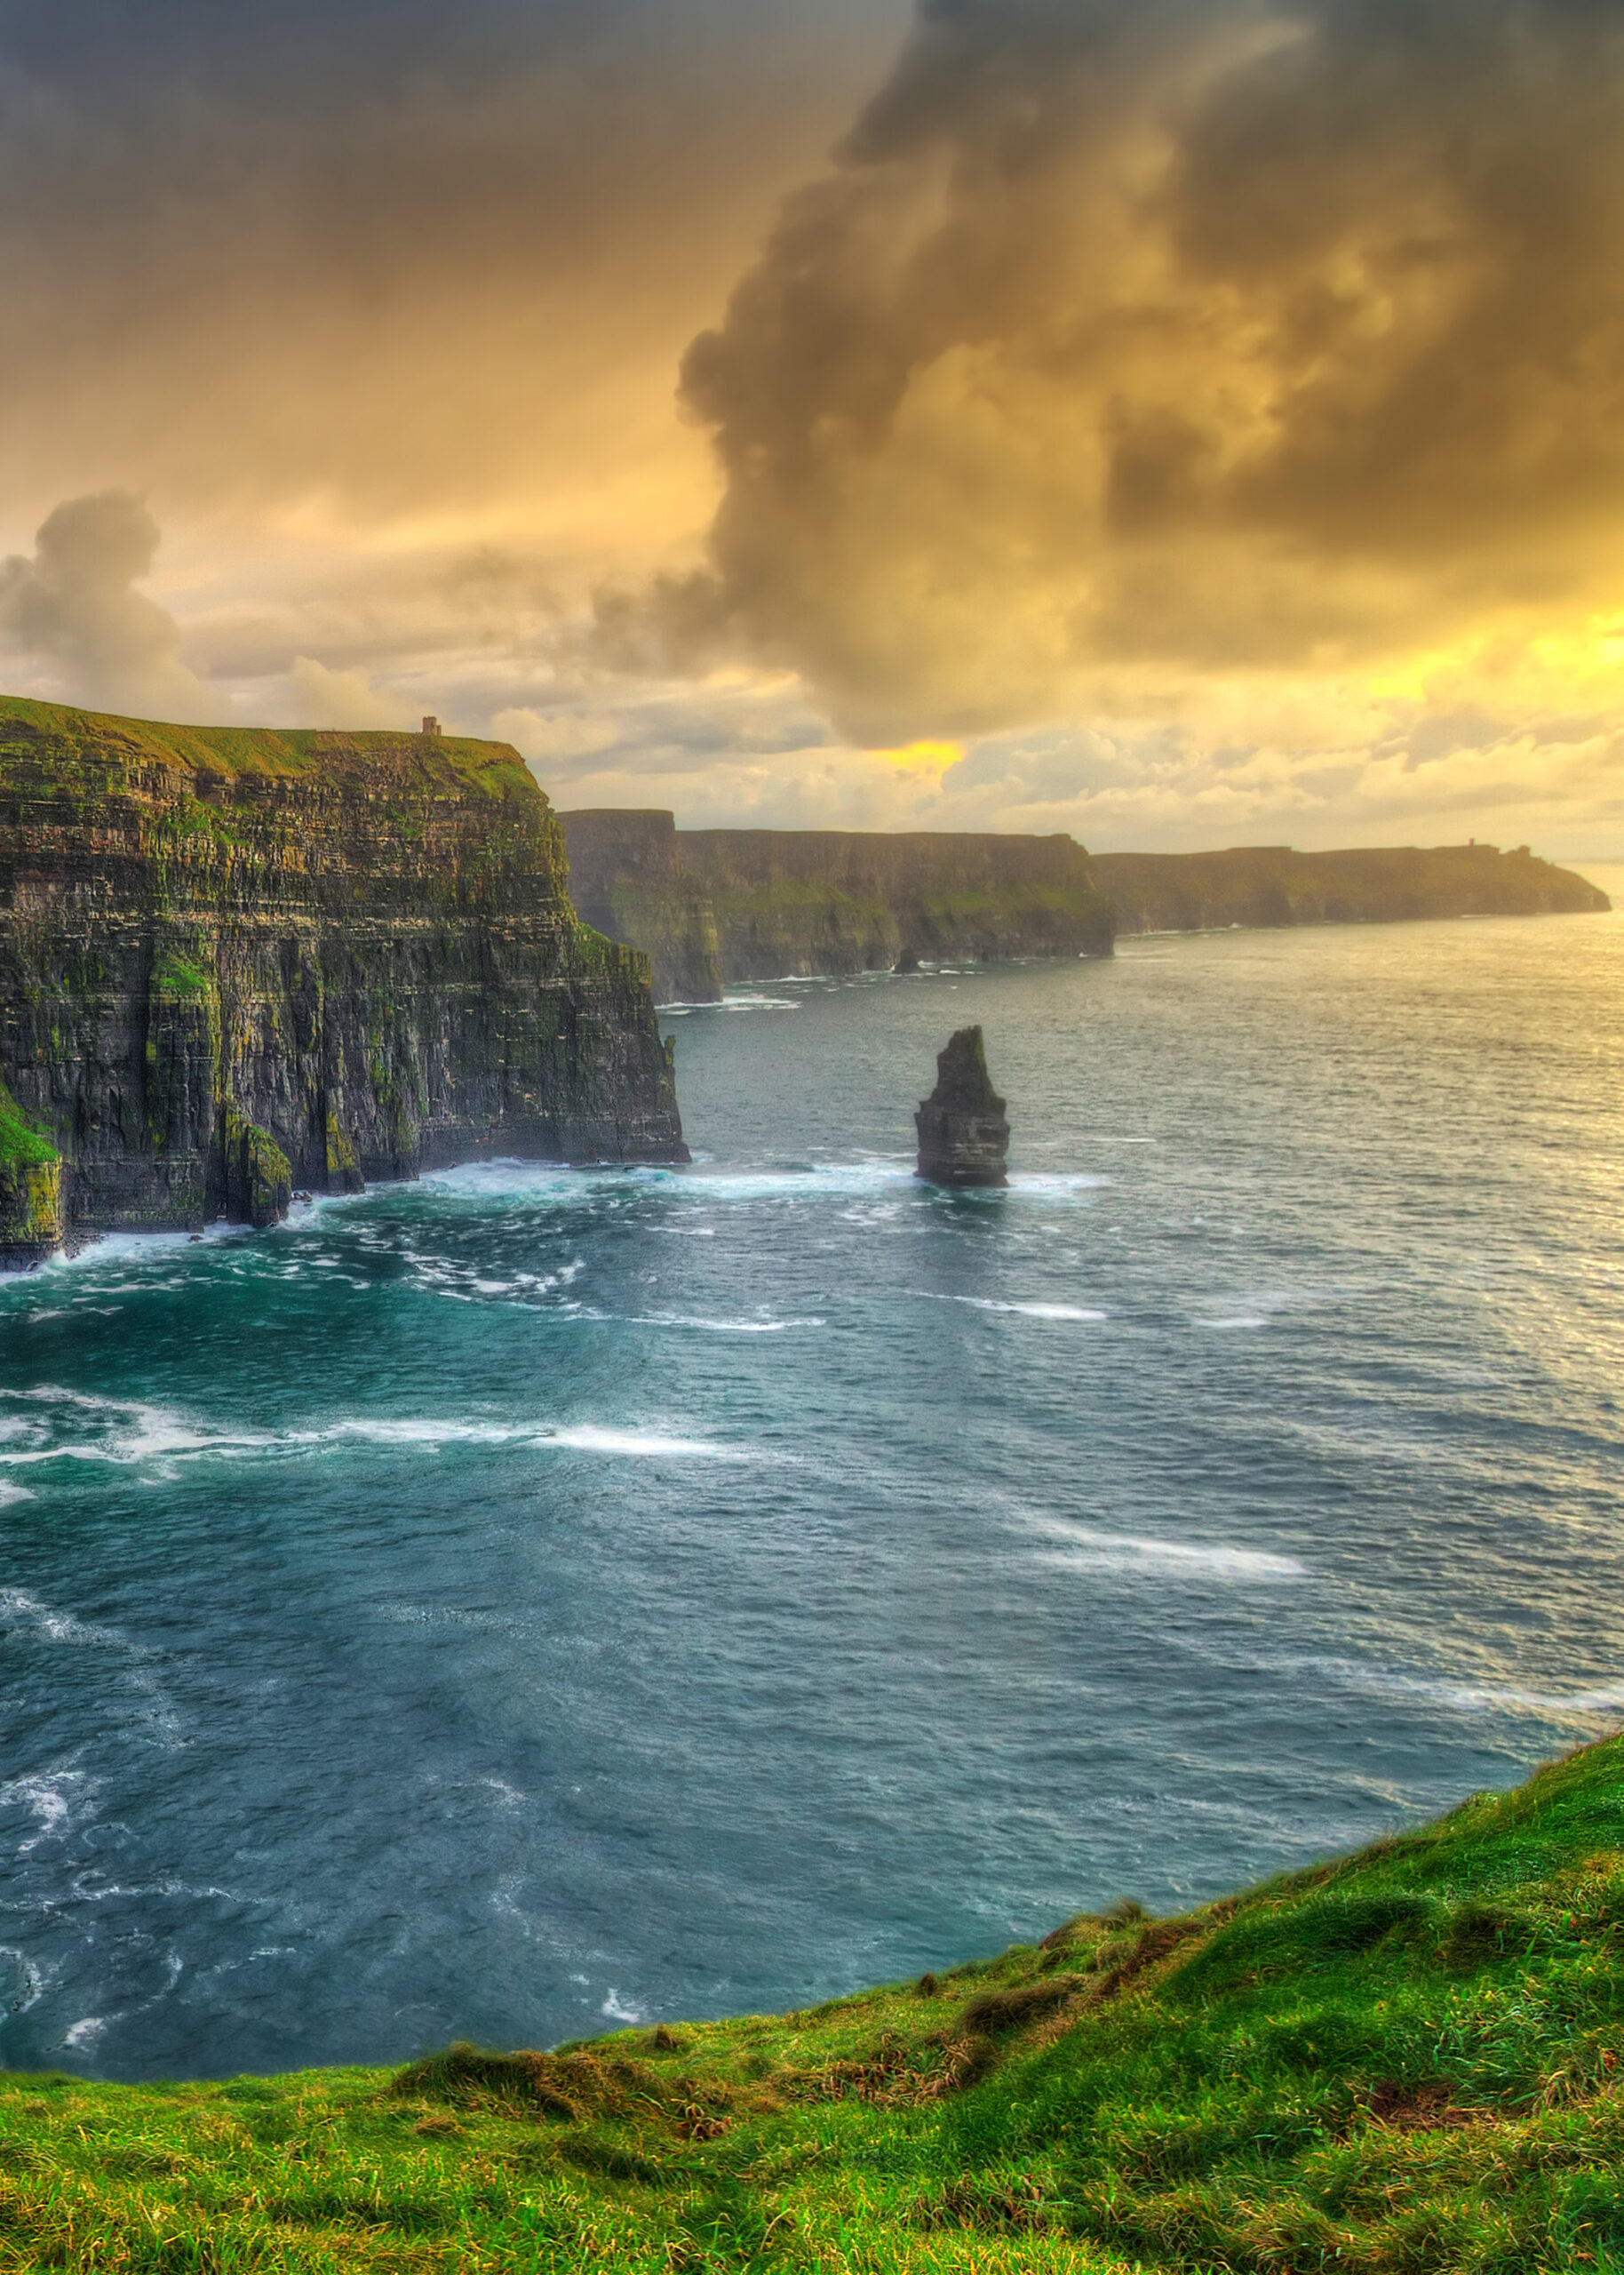 Study Ireland – Traveledex